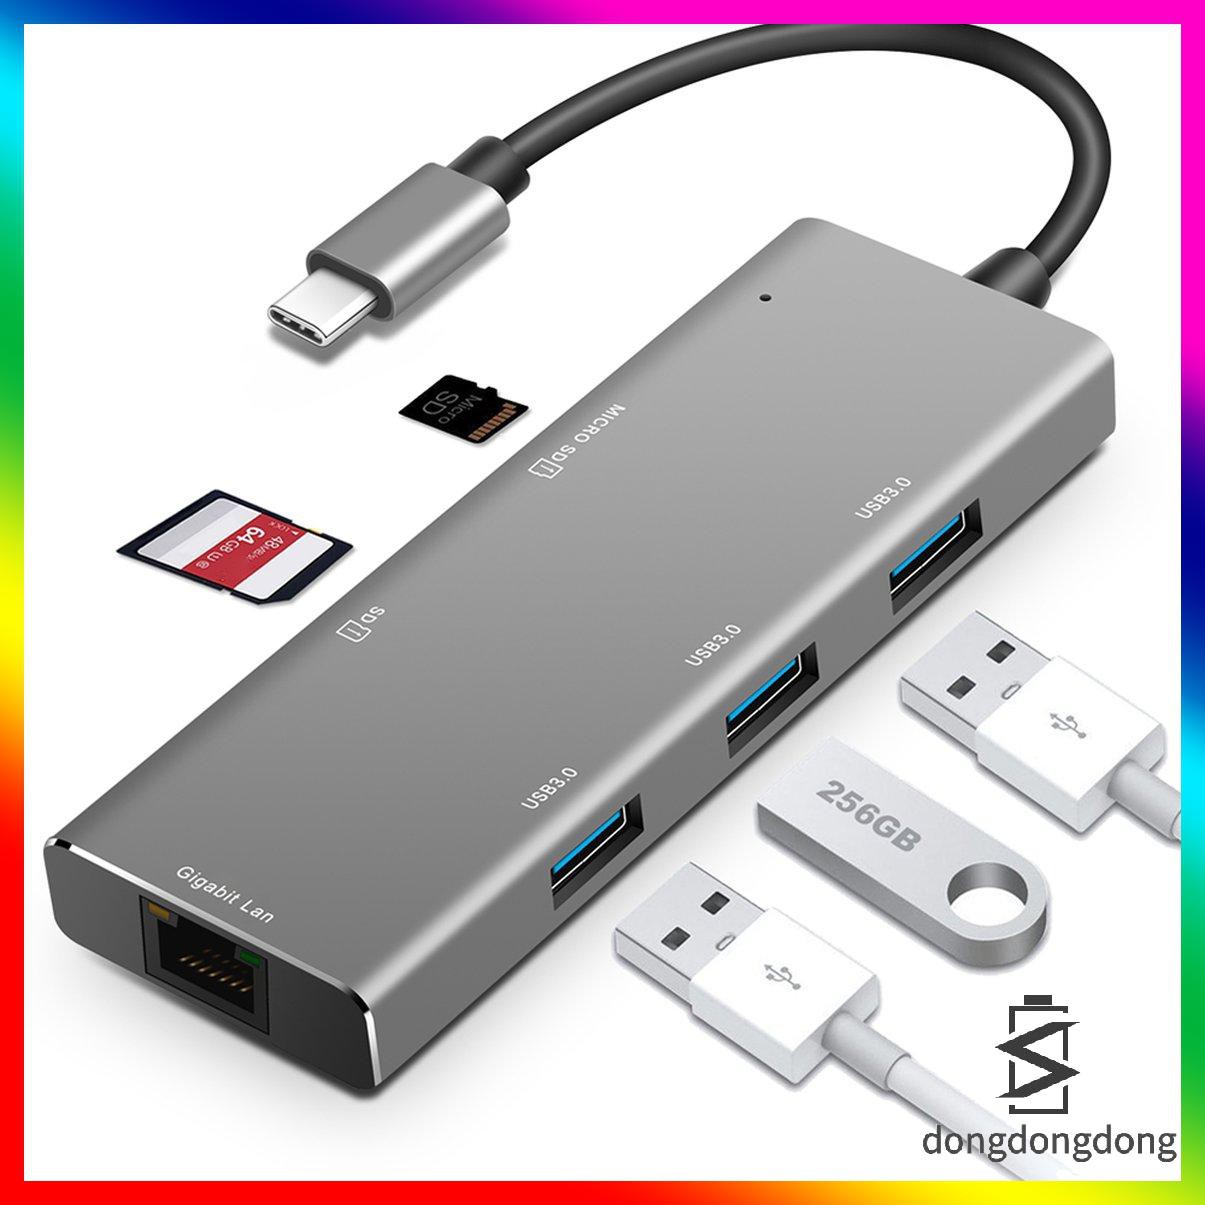 [thermometer]YC720 Multifunctional 6 in 1 USB Hub Type C to USB 3.0 RJ45 Gigabit Adapter